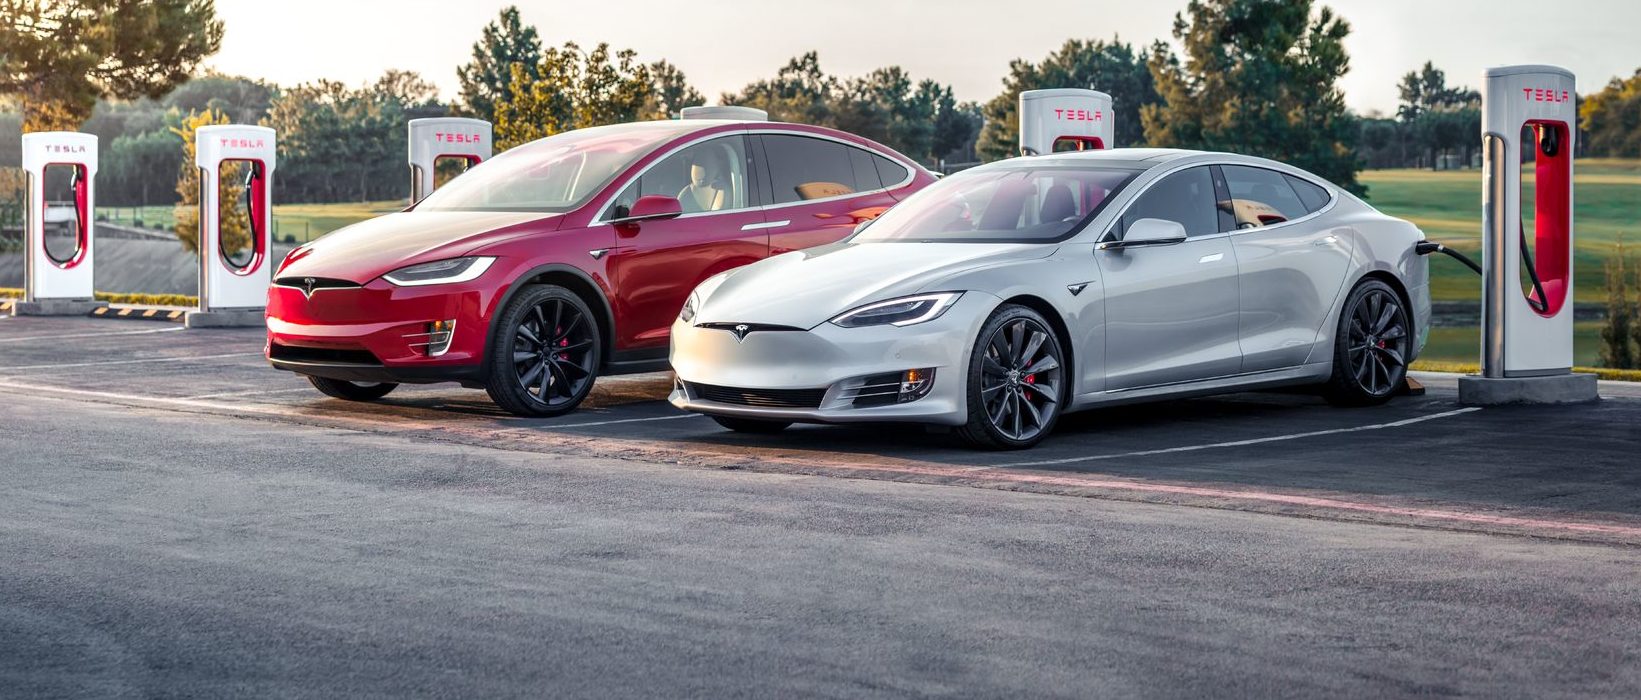 Tesla pumps up Model S, Model X Long Range prices by $5,000